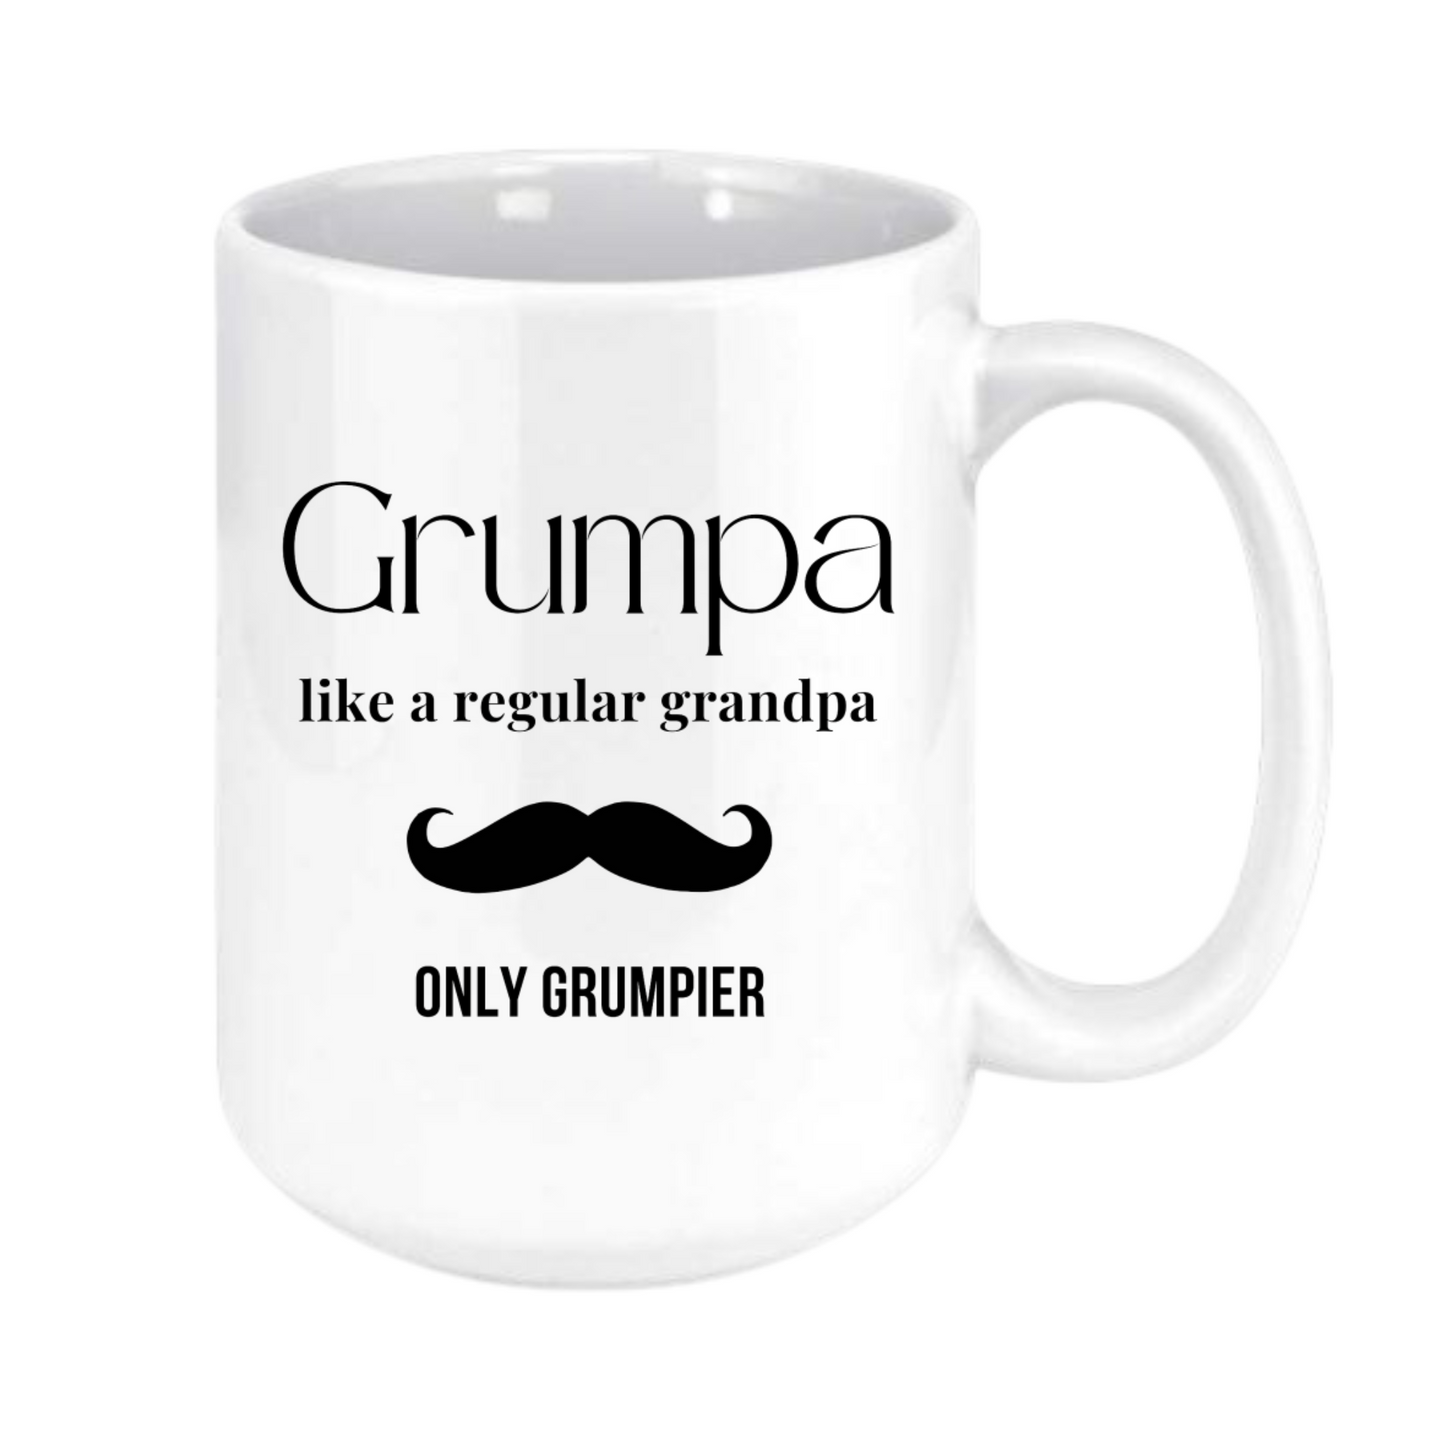 grumpa mug